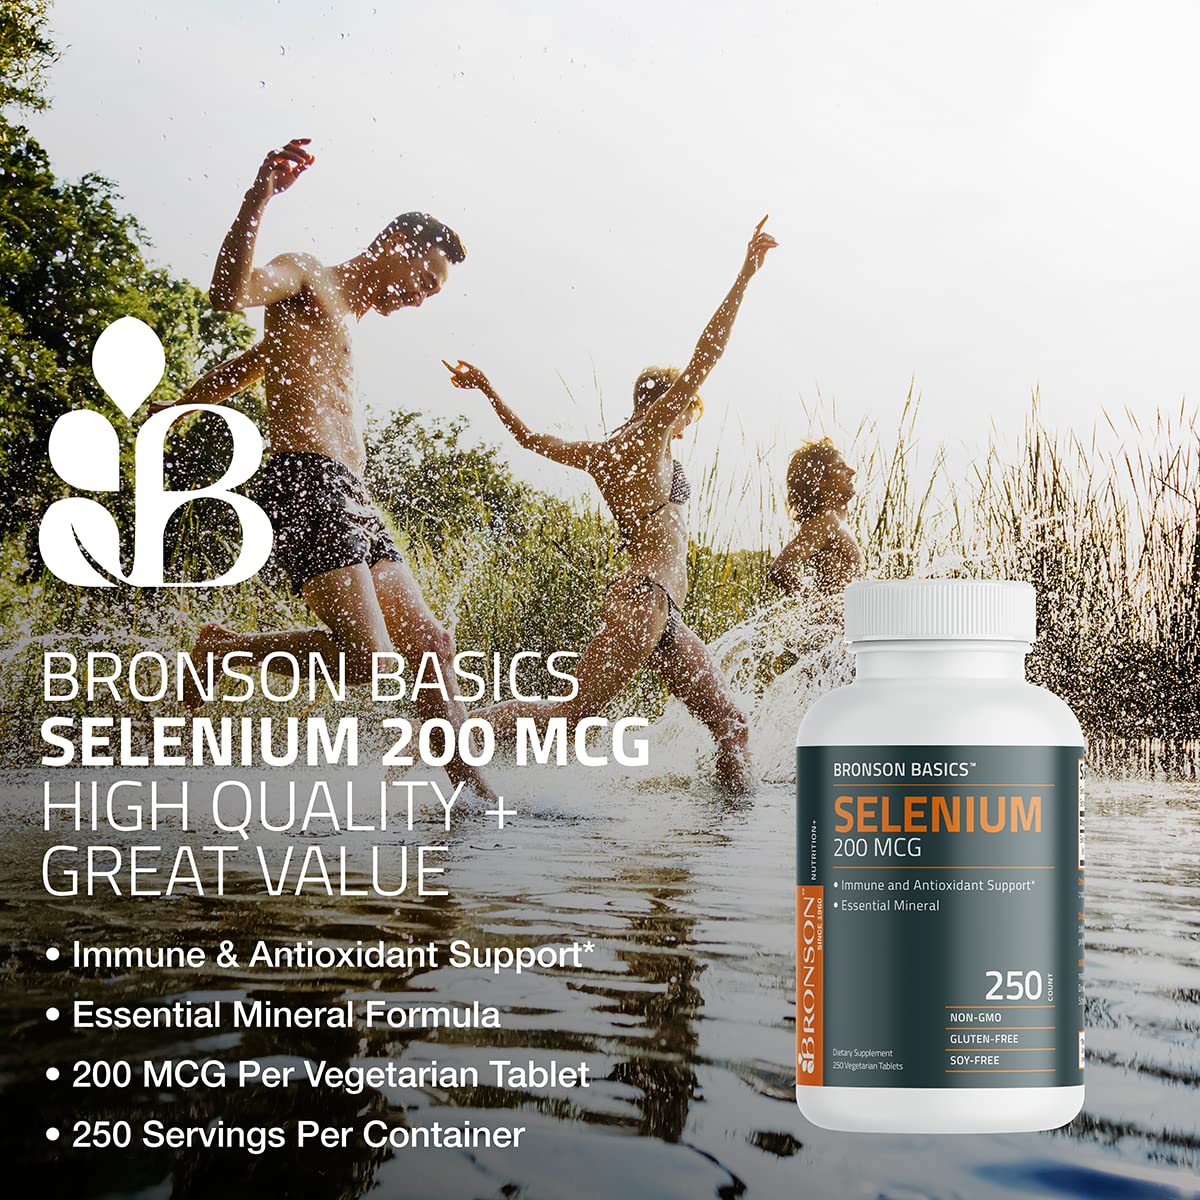 Bronson Selenium 200 mcg Immune & Antioxidant Support Essential Mineral, 250 Vegetarian Tablets